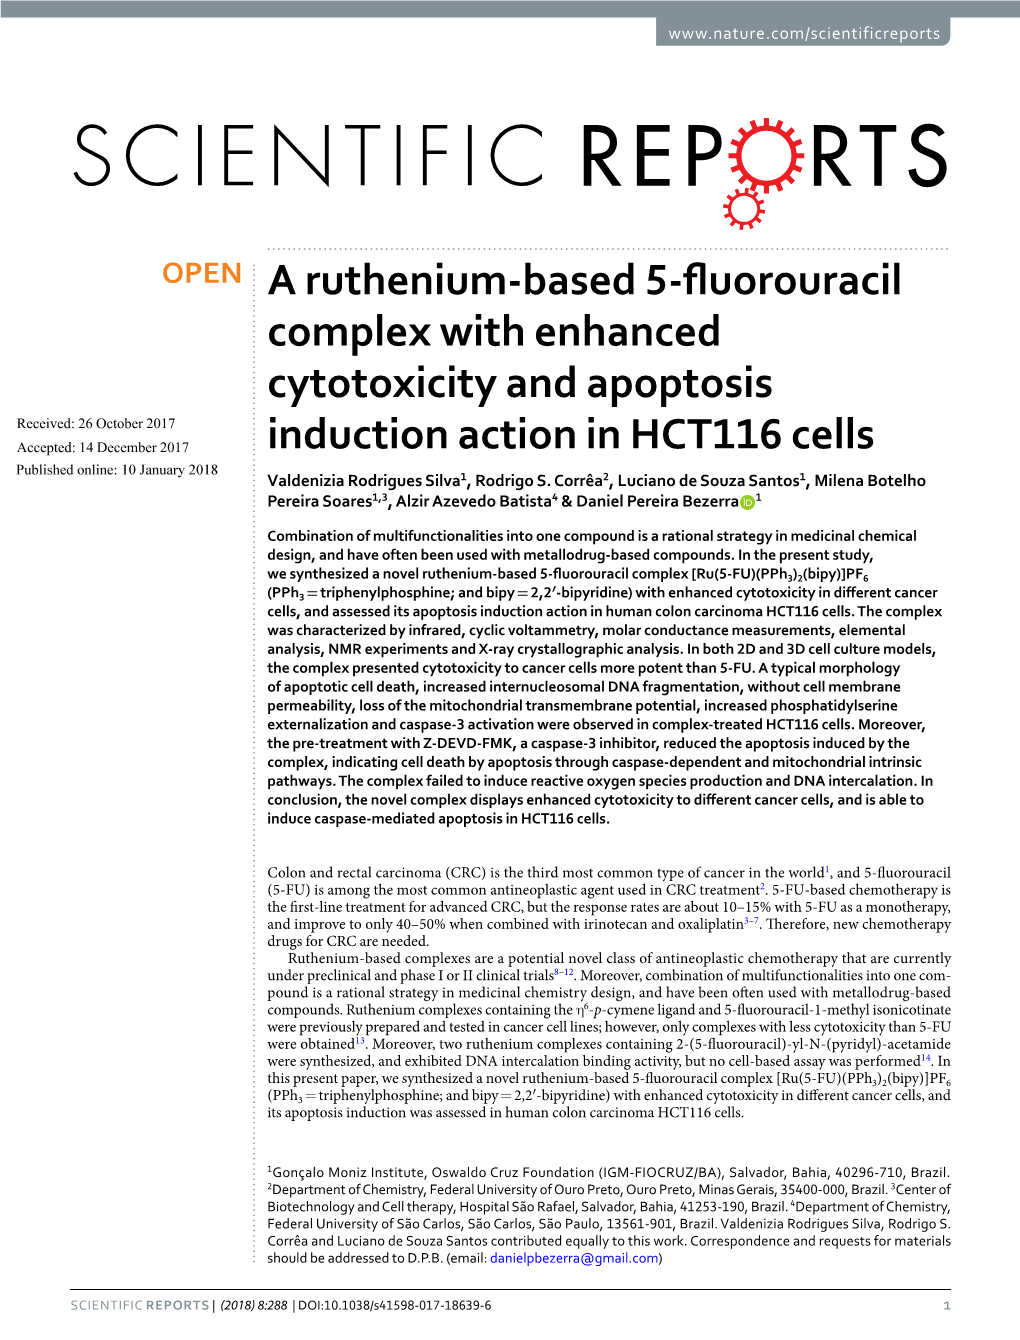 A Ruthenium-Based 5-Fluorouracil Complex with Enhanced Cytotoxicity